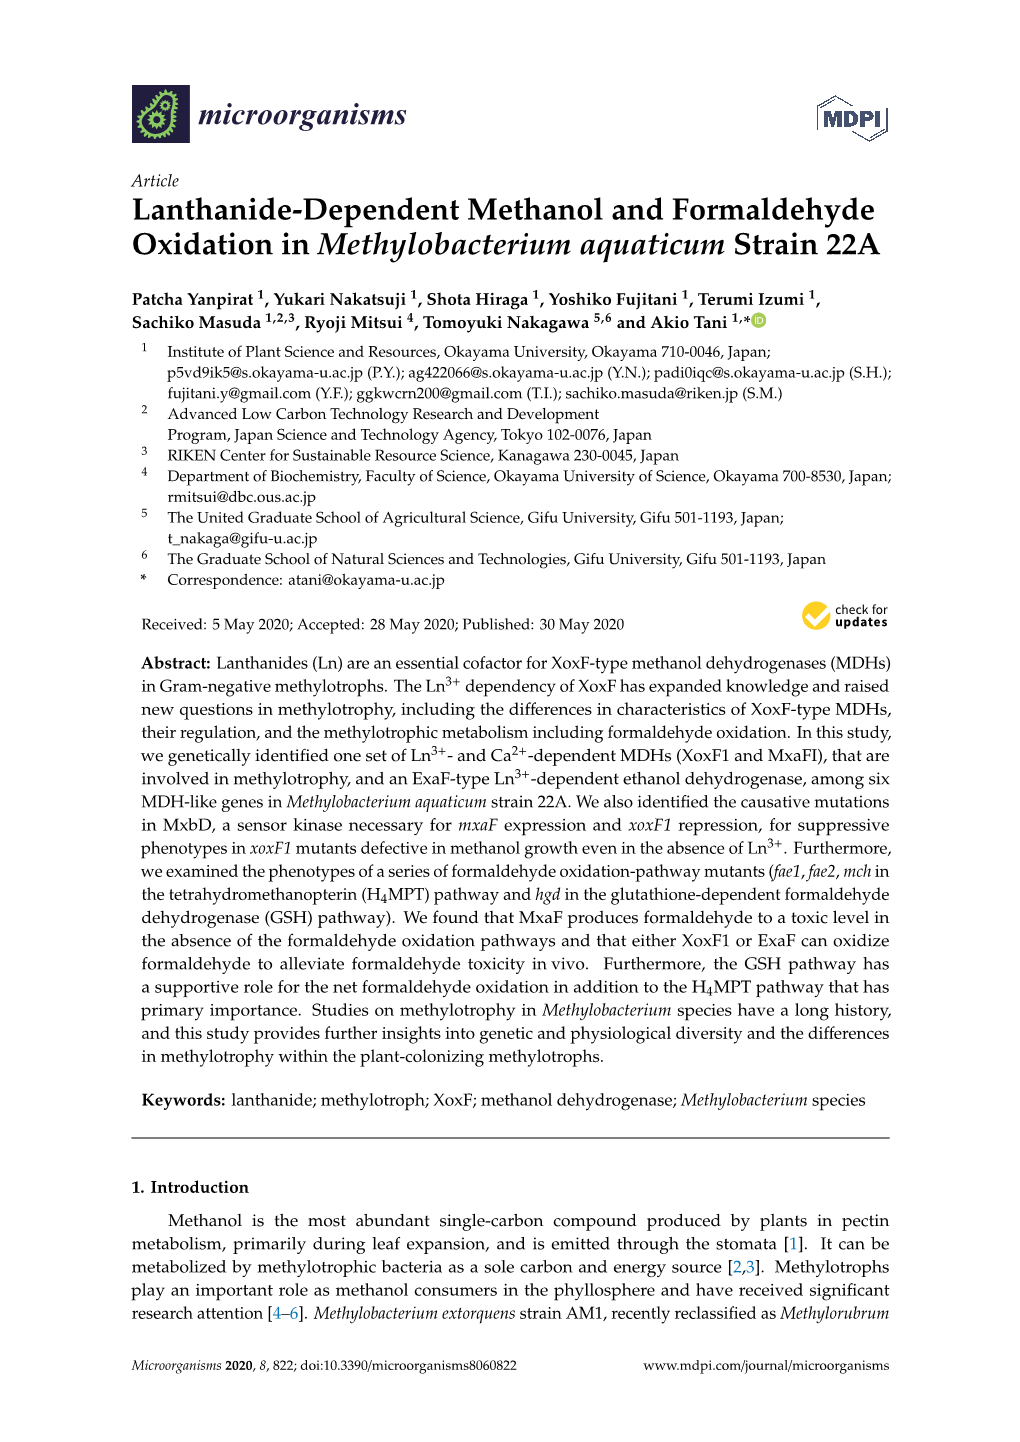 Lanthanide-Dependent Methanol and Formaldehyde Oxidation in Methylobacterium Aquaticum Strain 22A